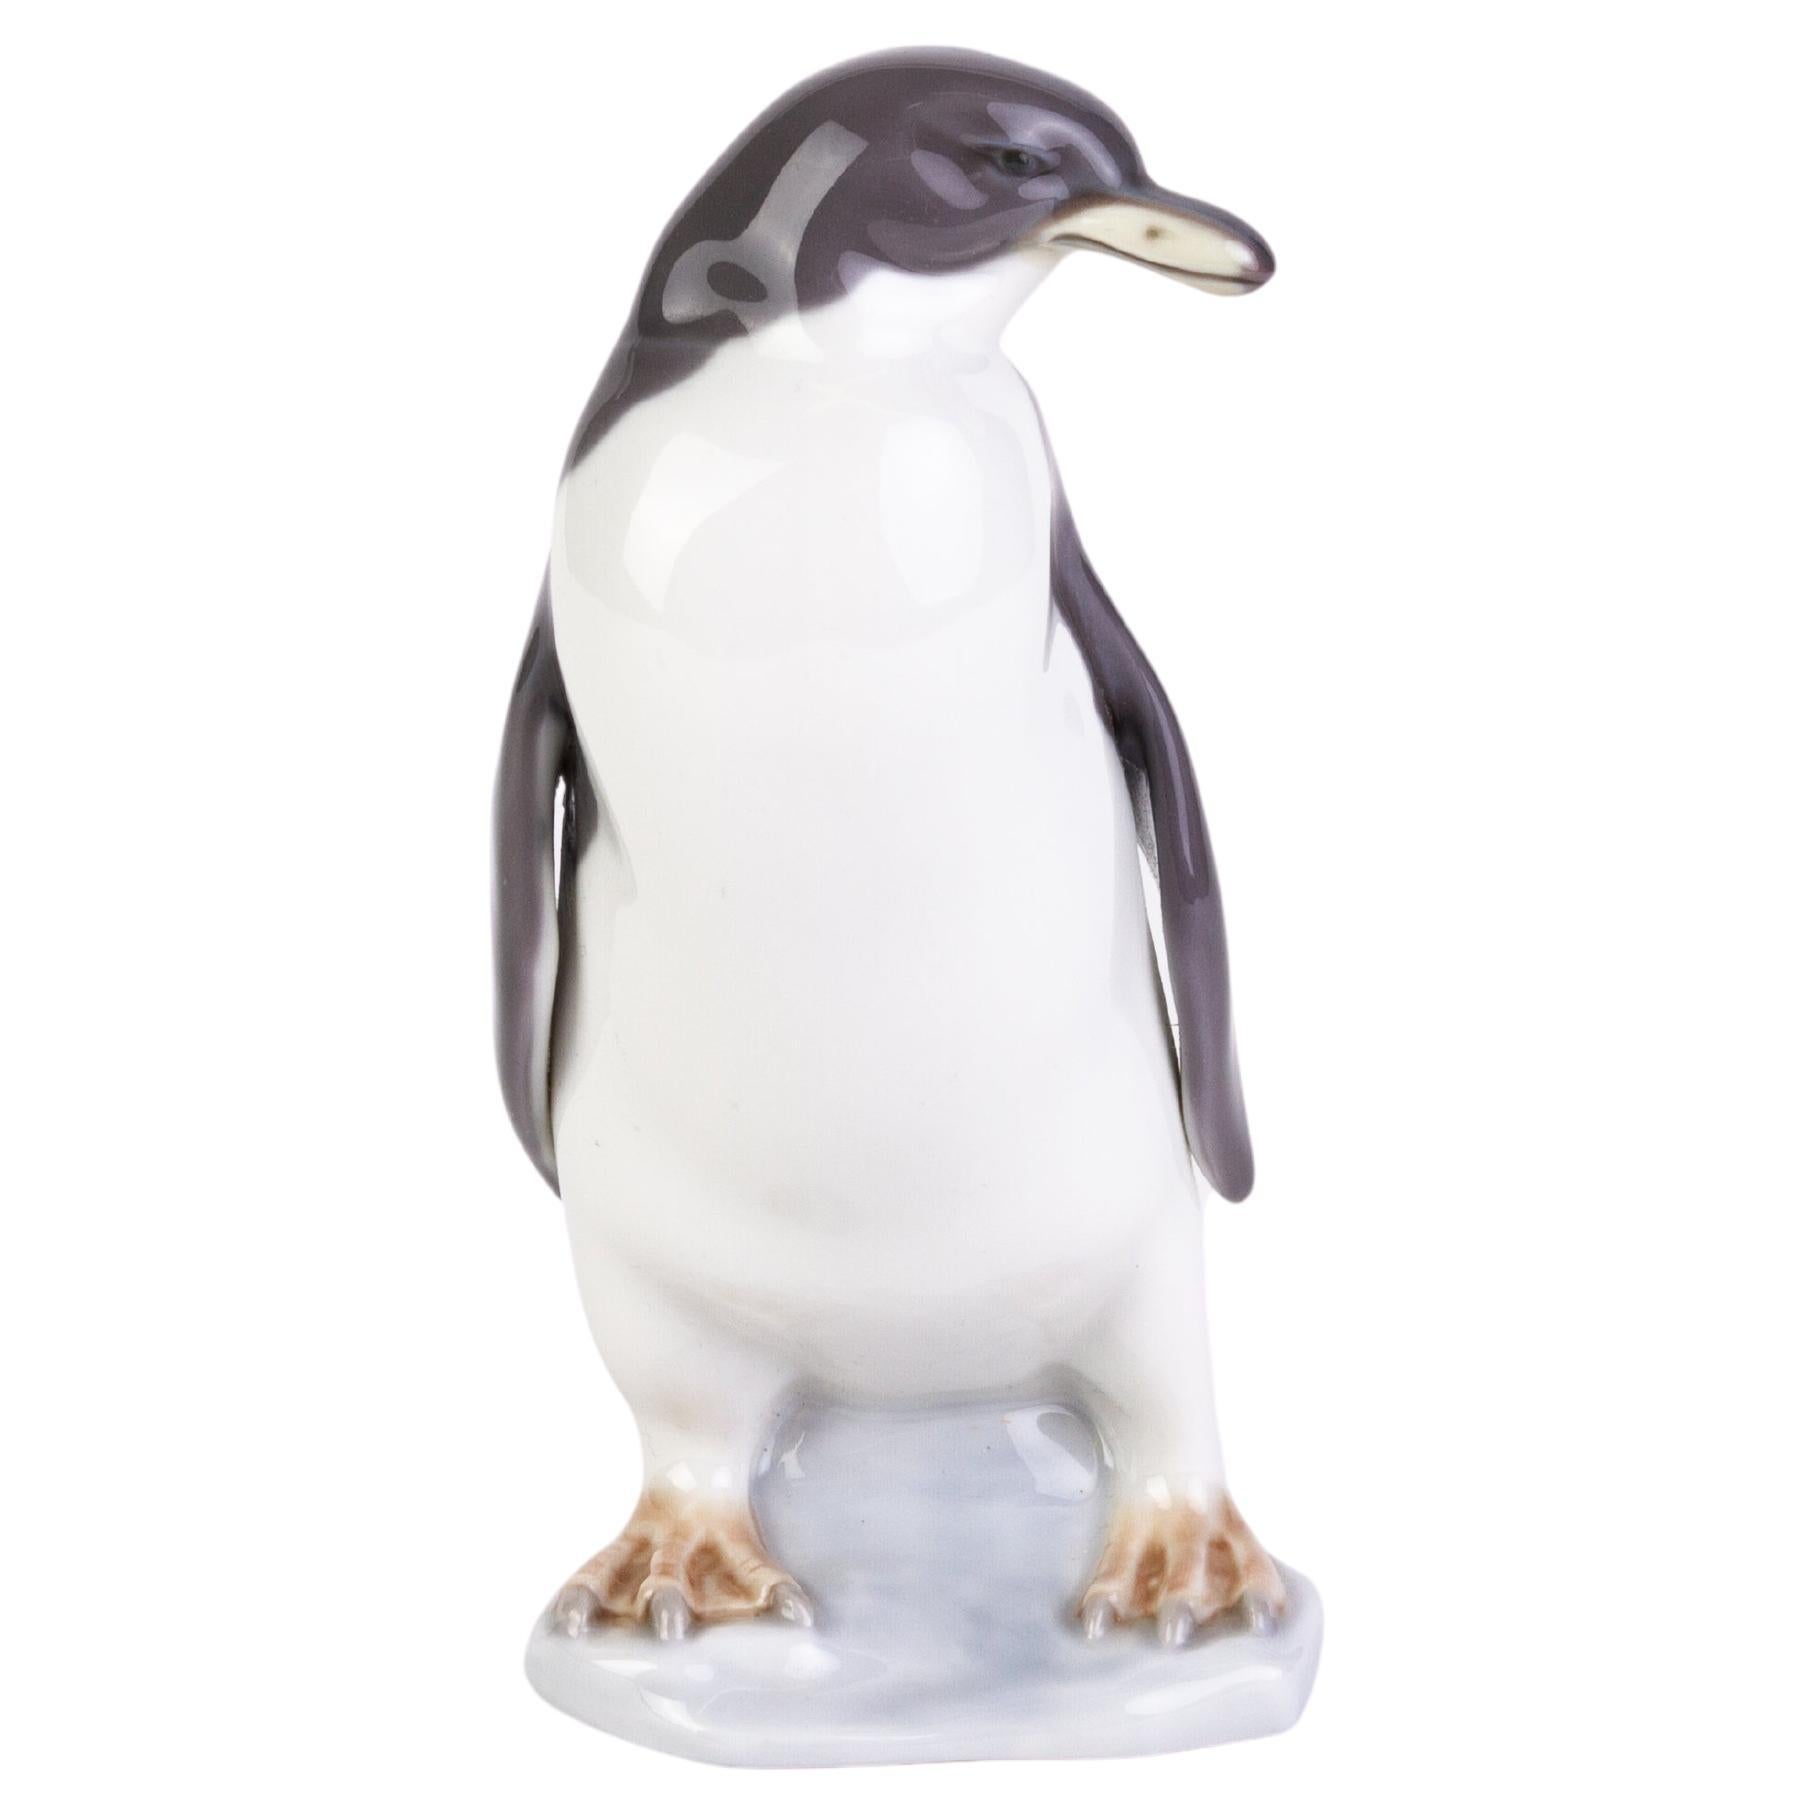 Retired Lladro Fine Porcelain Sculpture Figure Group "Penguin" 5248 For Sale